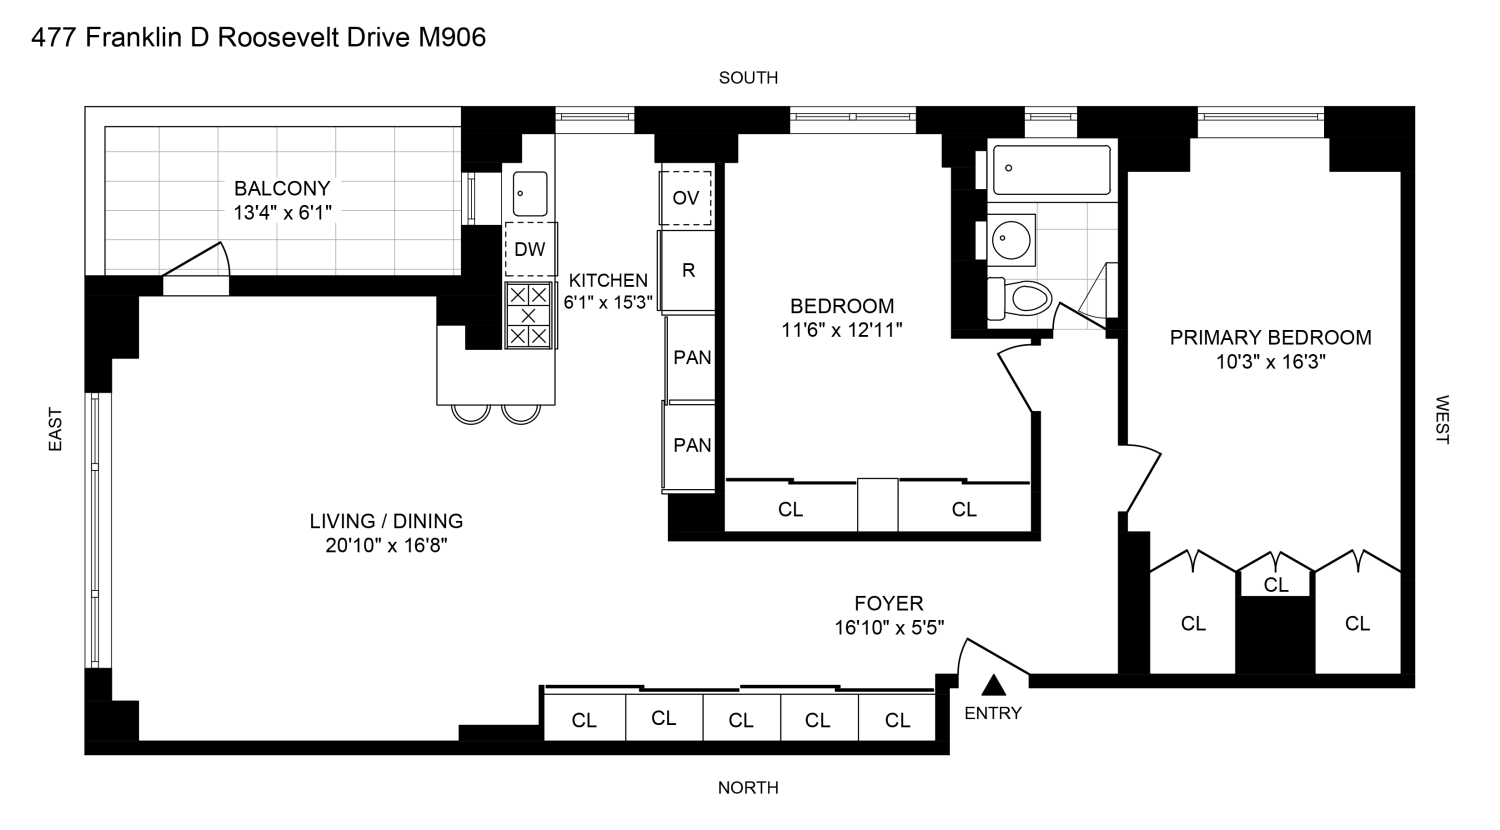 Floorplan for 477 FDR Drive, M906